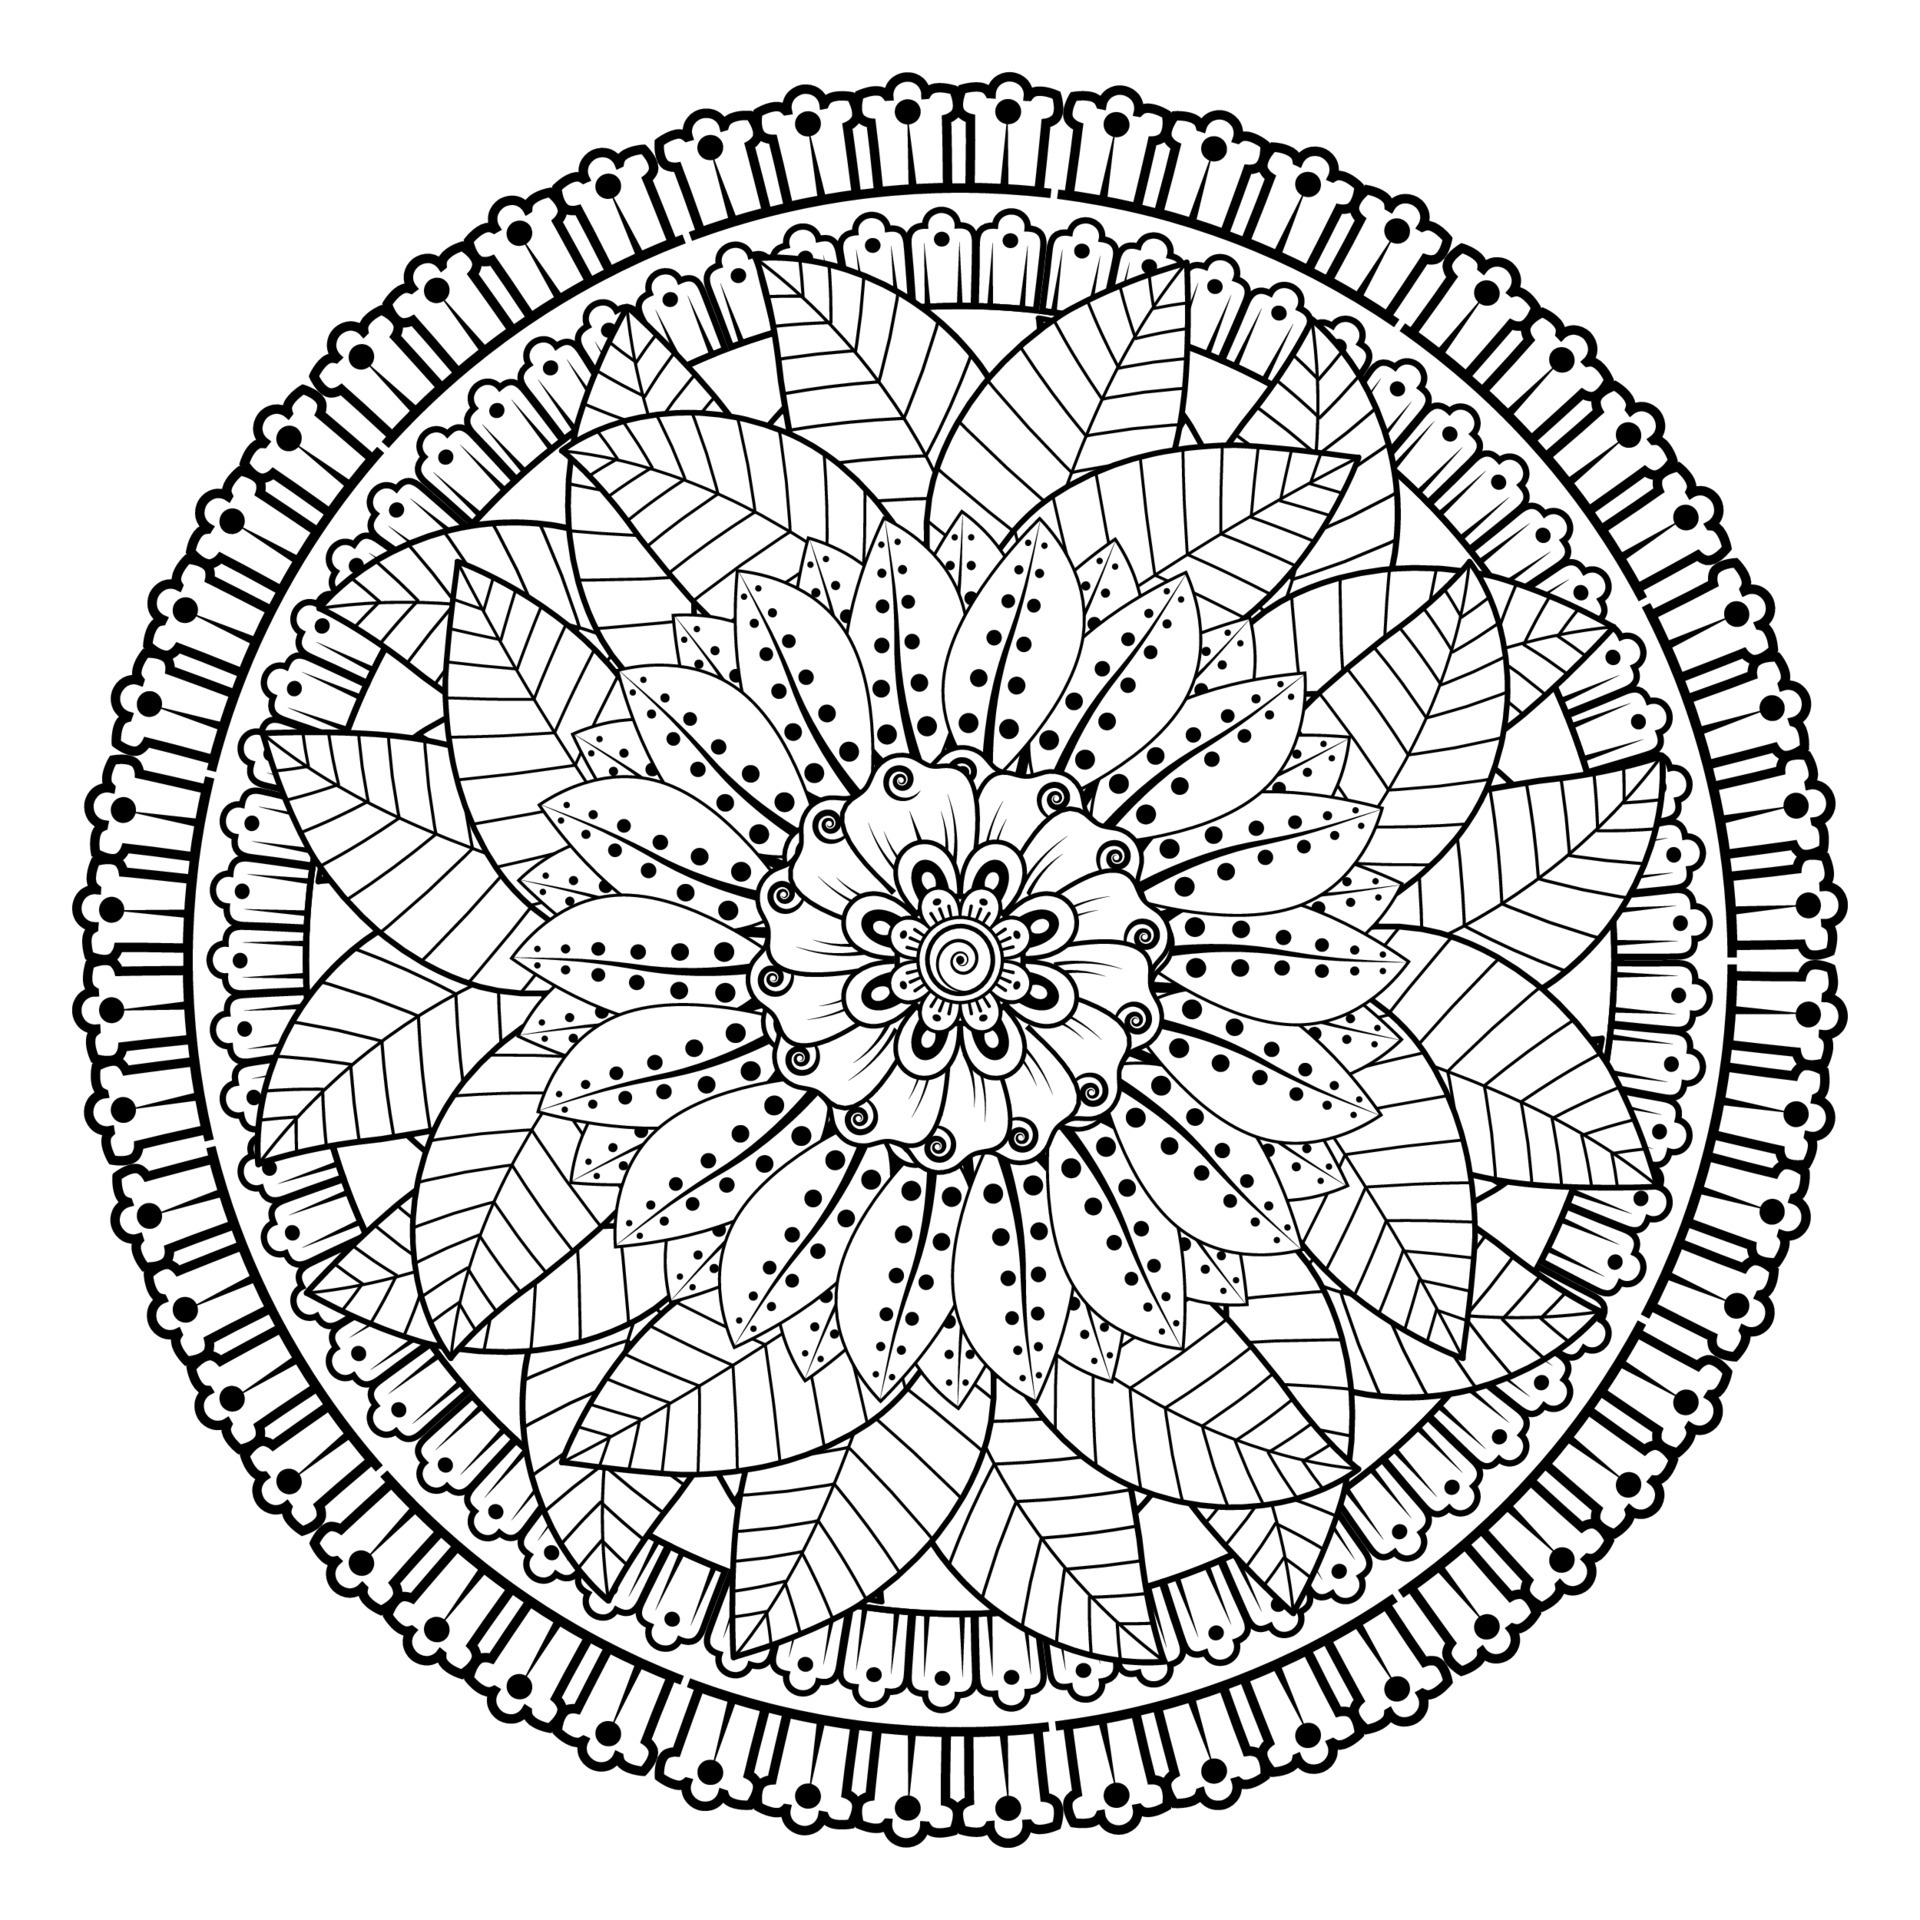 Circular pattern in form of mandala for Henna, Mehndi, tattoo ...